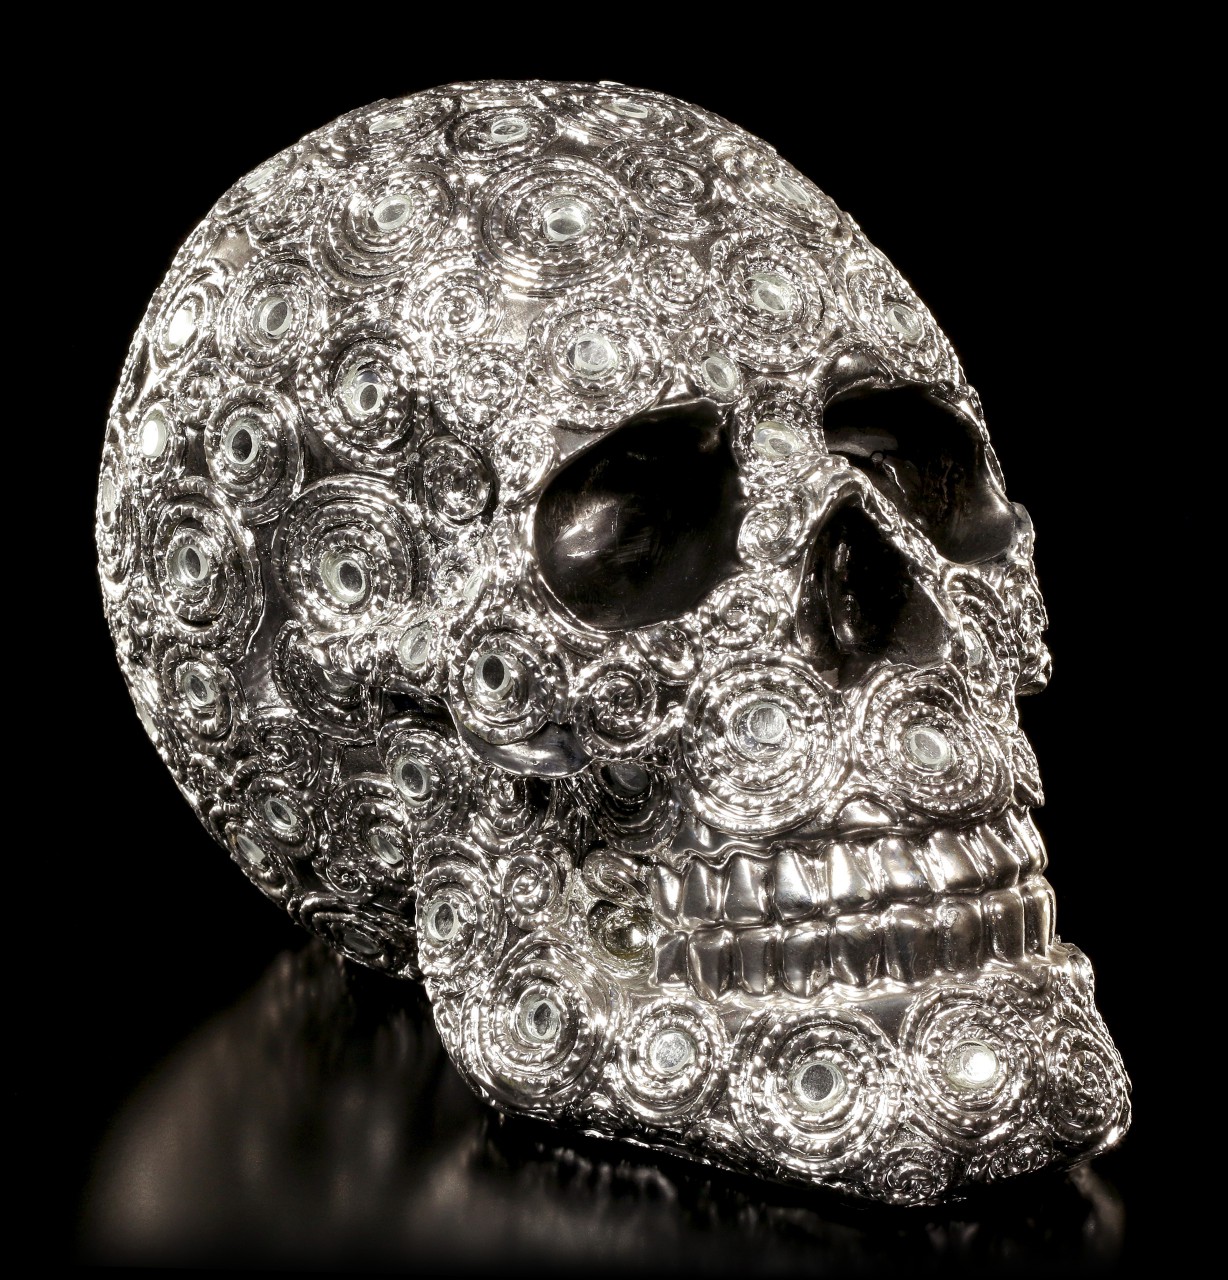 Skull with Mirrors - Spiral Reflection medium